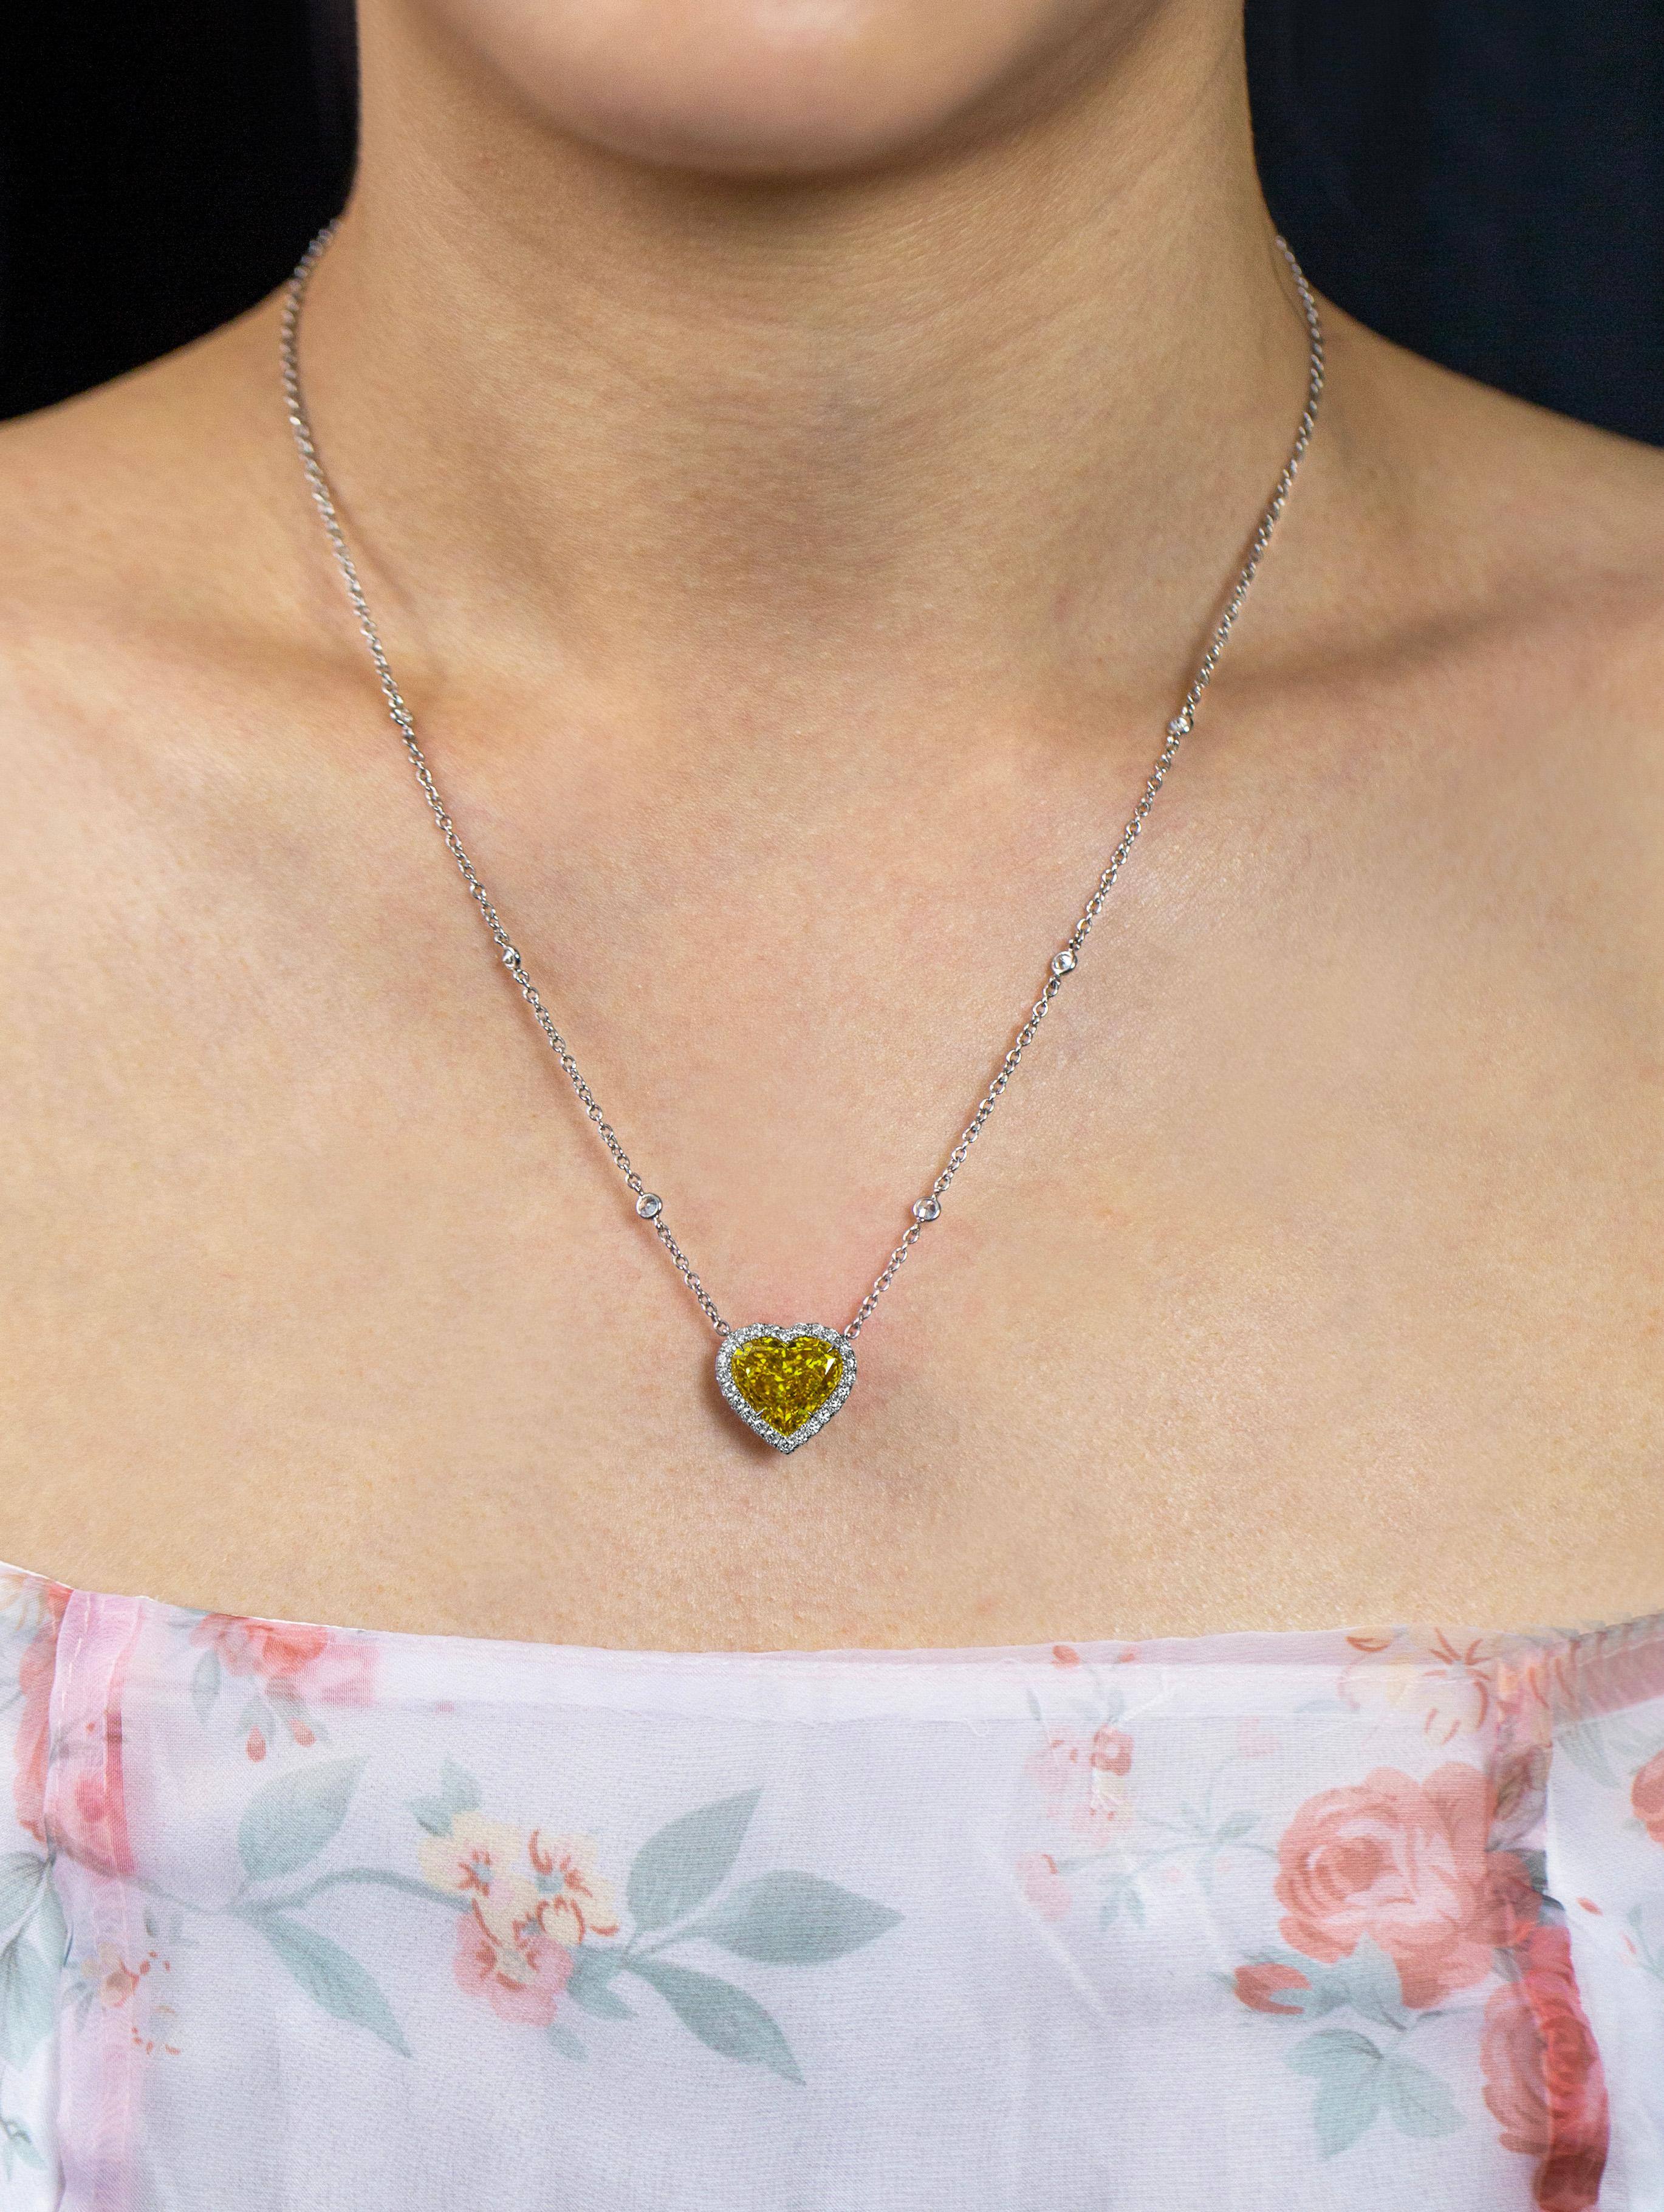 Heart Cut 4.02 Carat Fancy Deep Orangy Yellow Heart Shape Diamond Halo Pendant Necklace For Sale